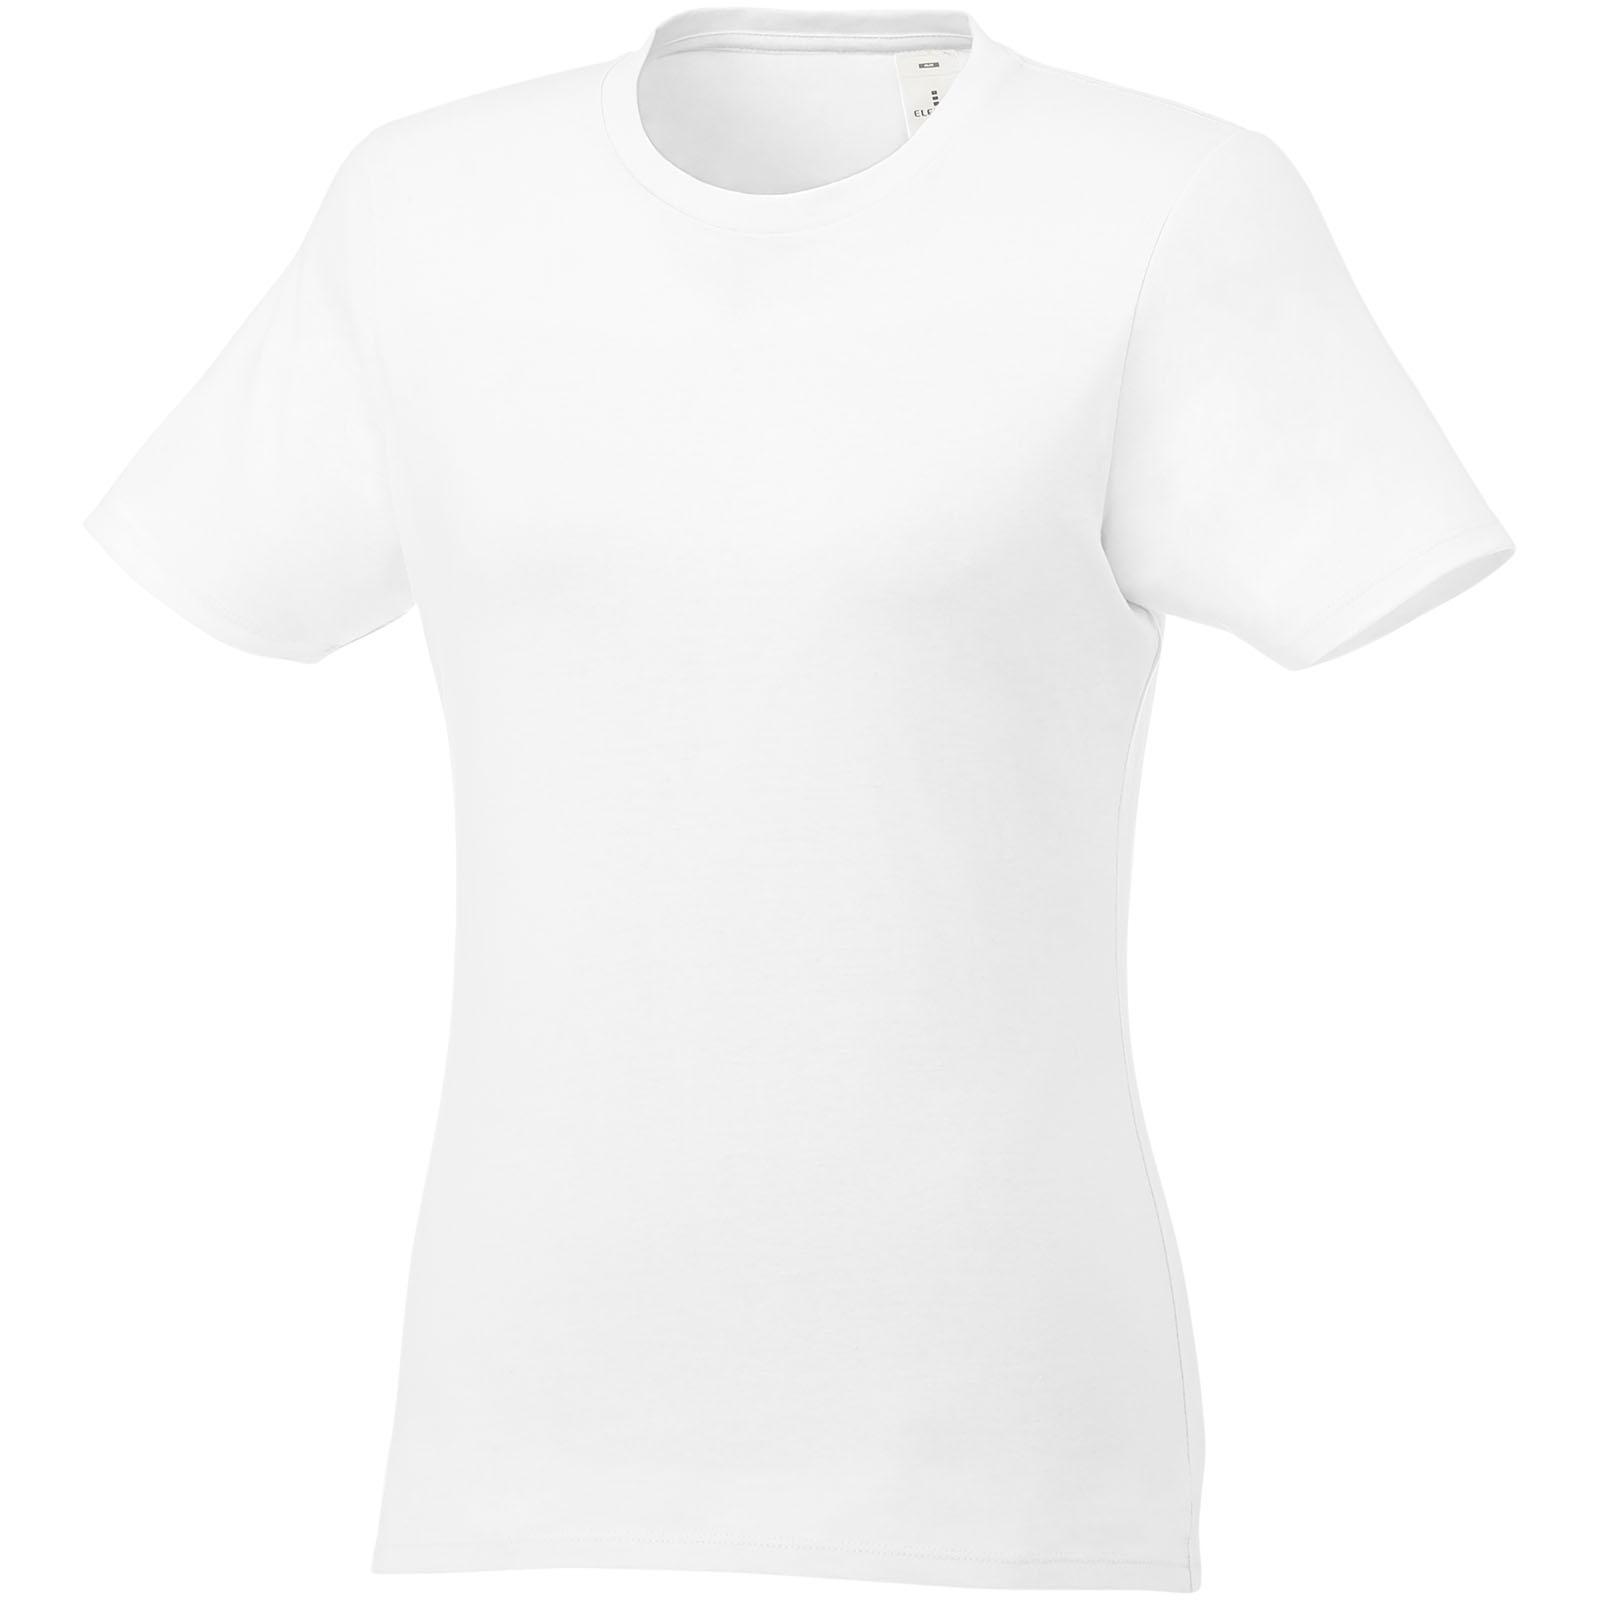 T-shirts - Heros short sleeve women's t-shirt